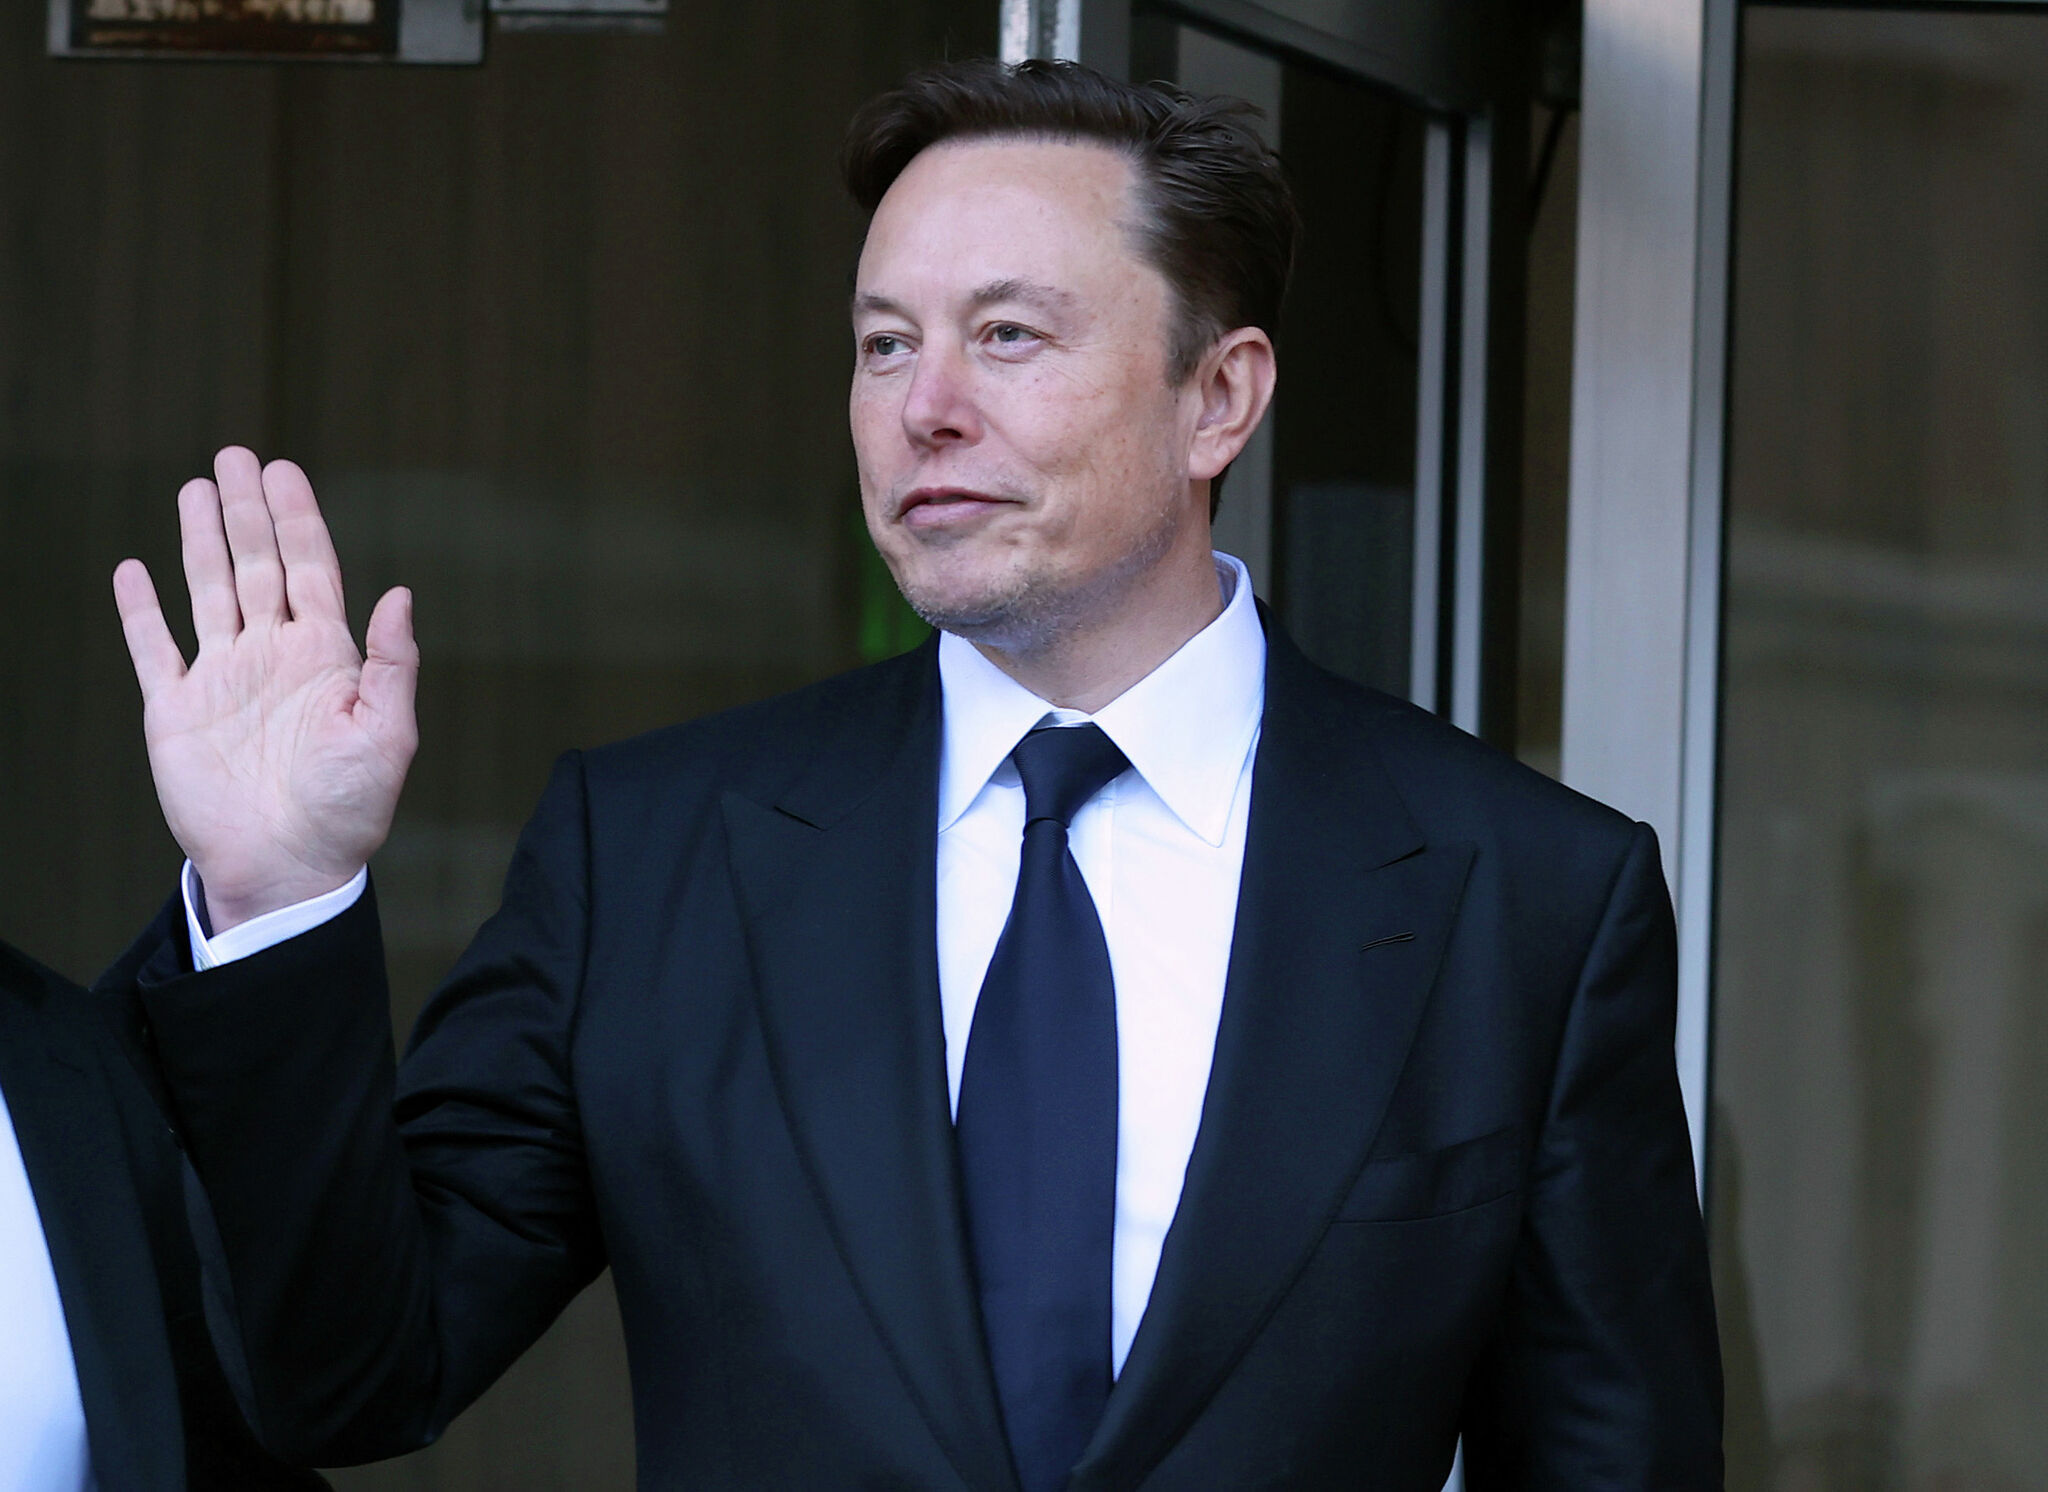 Elon Musk Criticizes California Bill On Trans Kids In Family Court